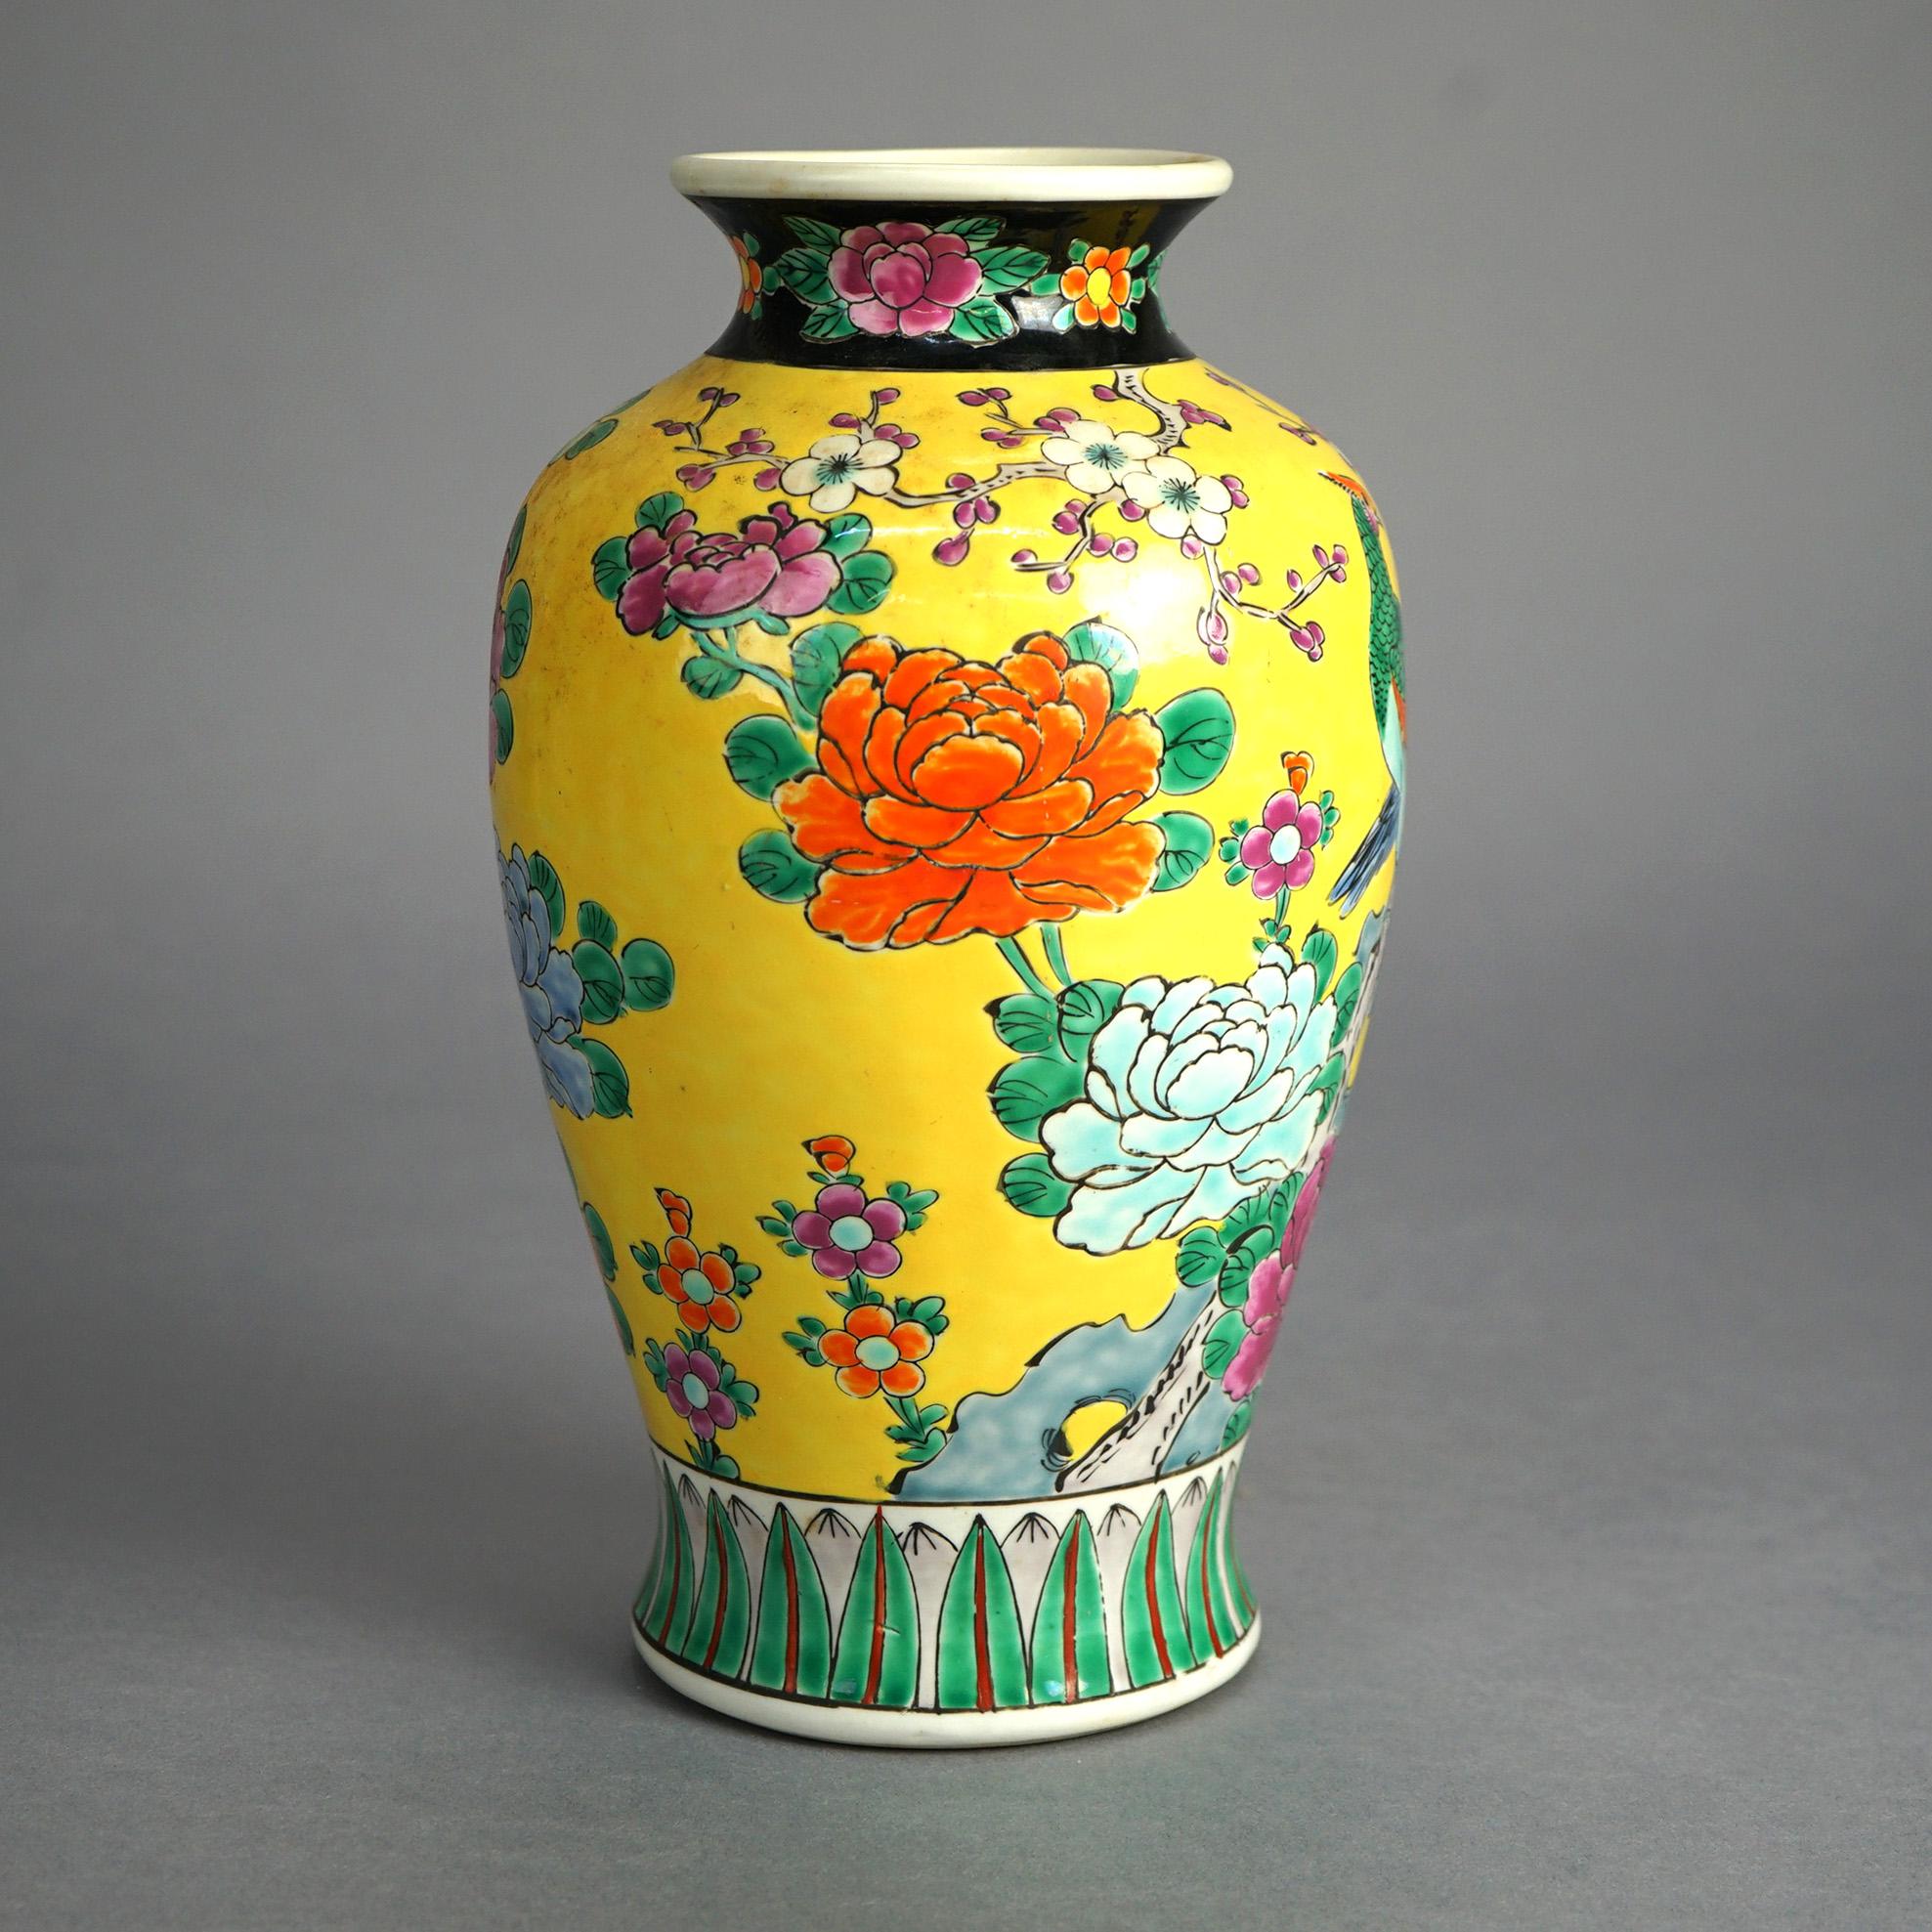 Antique Japanese Porcelain Enameled Vase, Garden &Scene Pheasant, Made in Japan, C1910

Measures- 10.75''H x 6.25''W x 6.25''D